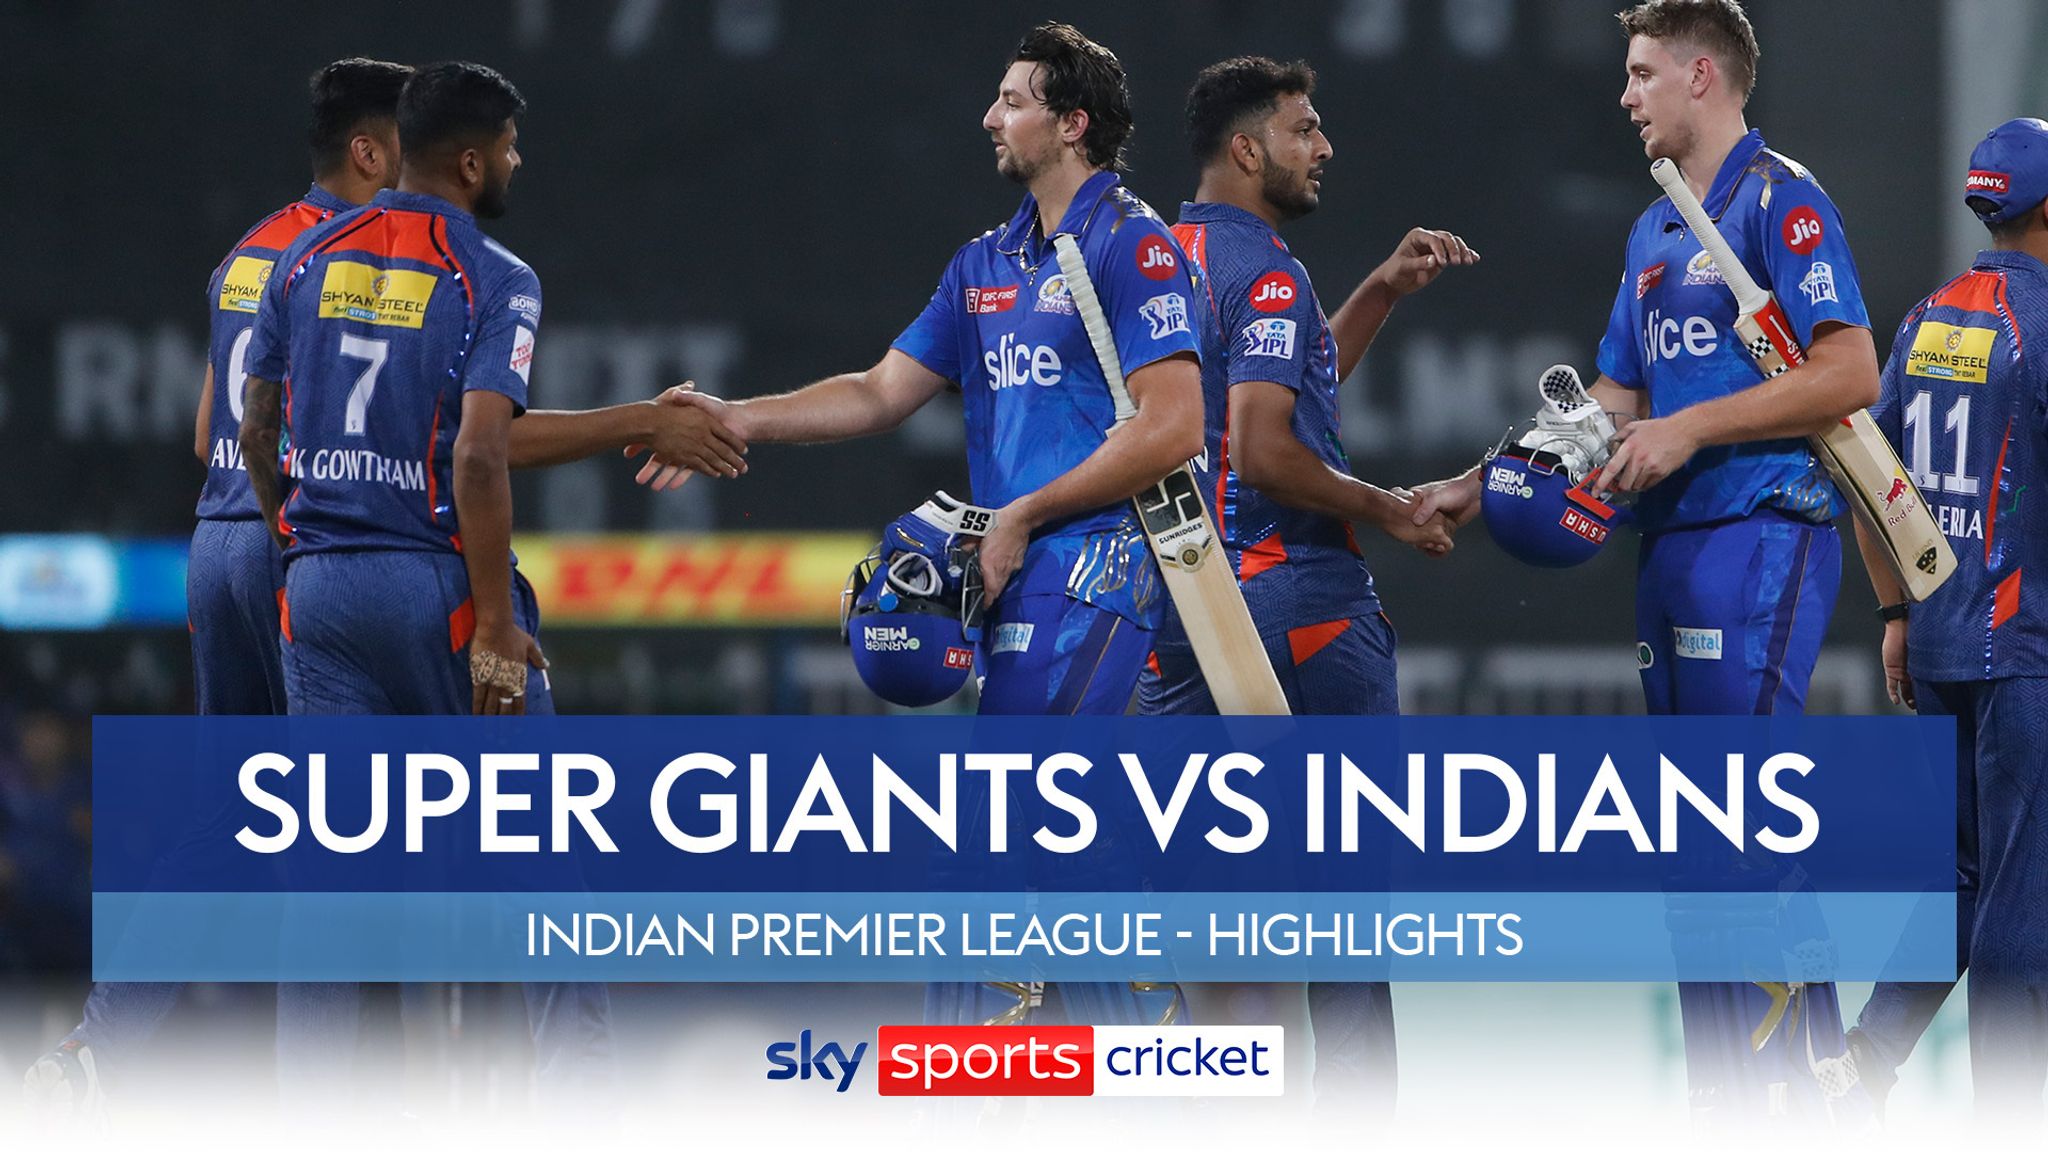 Lucknow Super Giants vs Mumbai Indians IPL highlights Video Watch TV Show Sky Sports